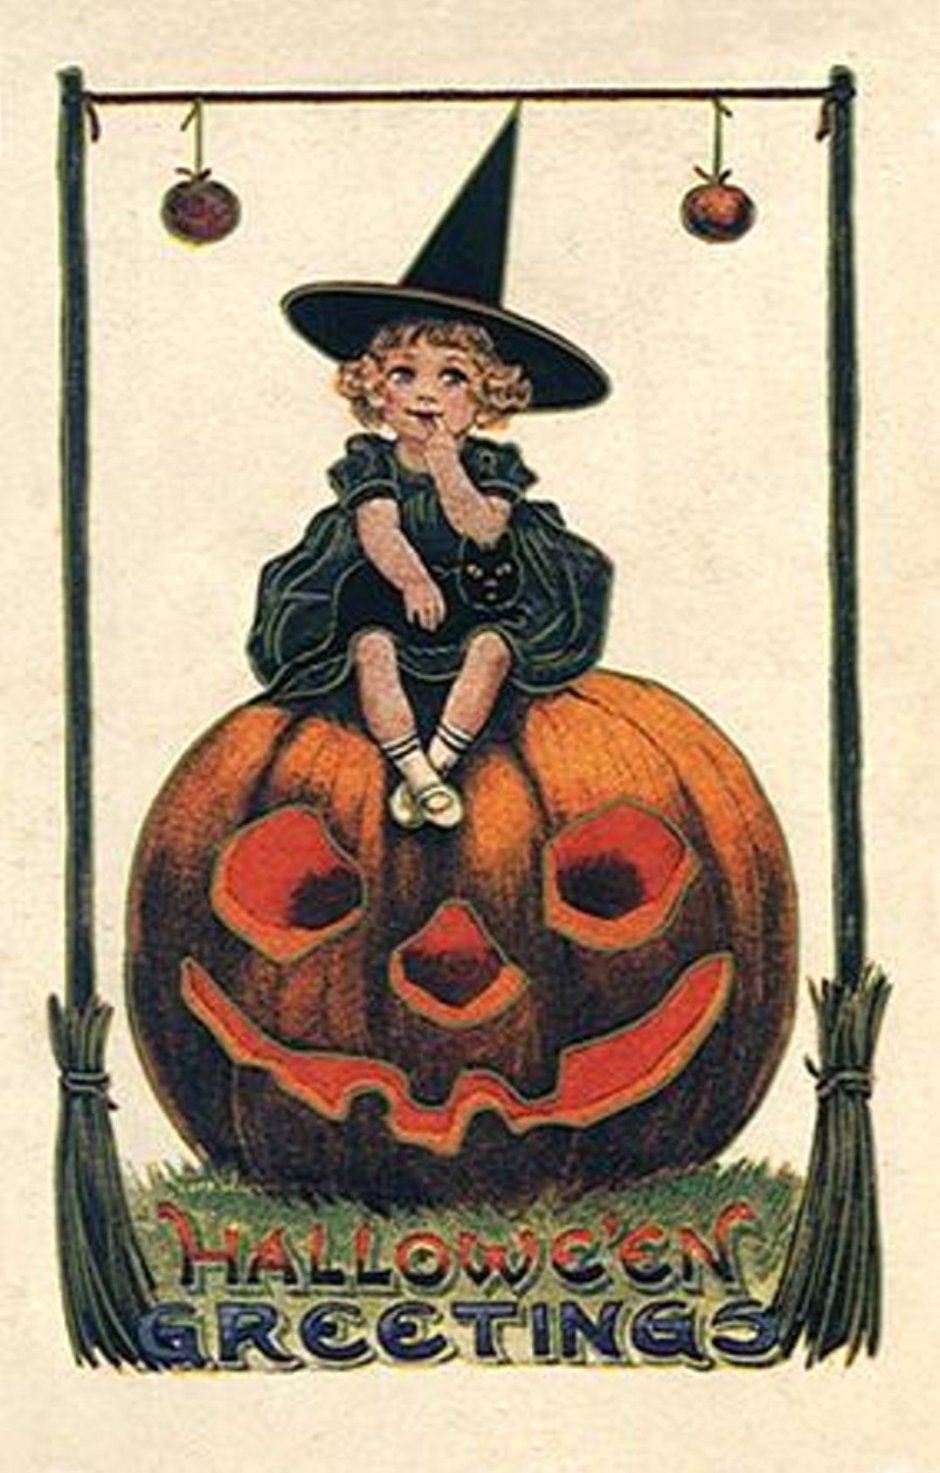 Хэллоуин винтажные открытки